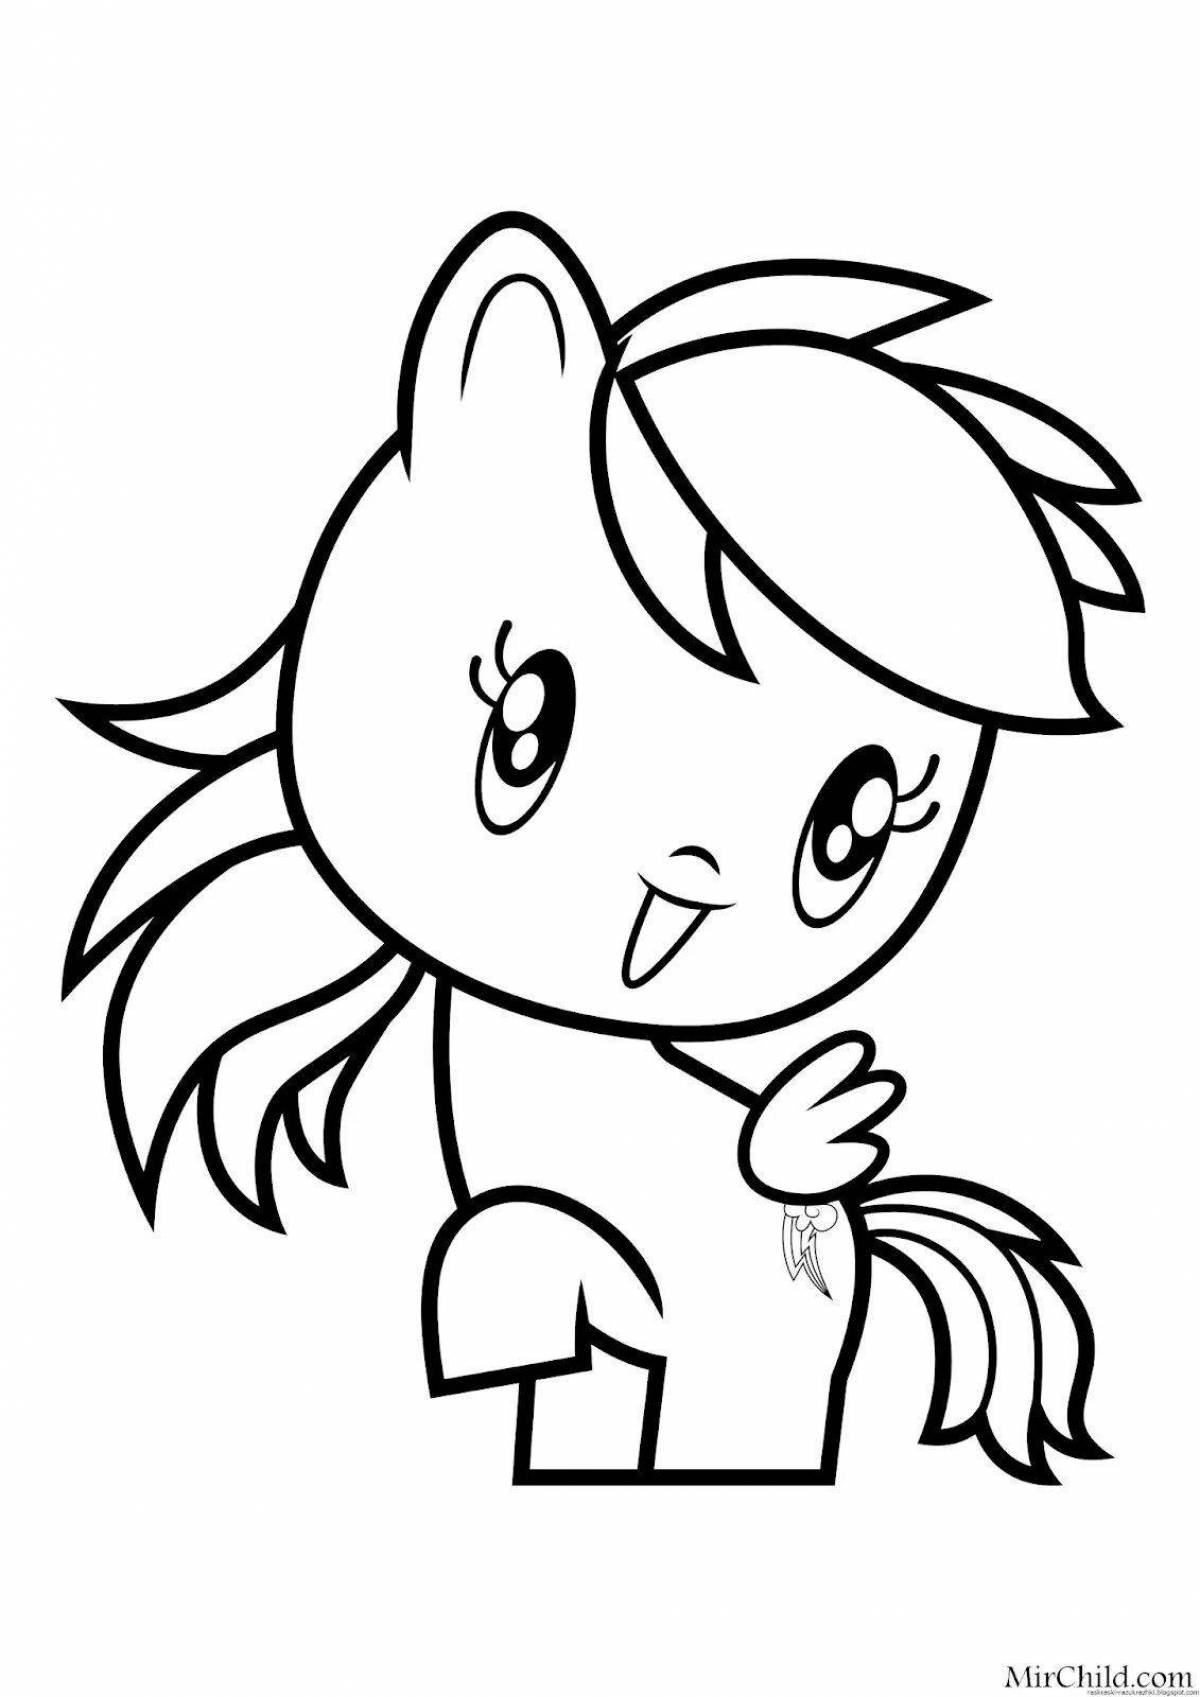 Coloring page happy cute pony